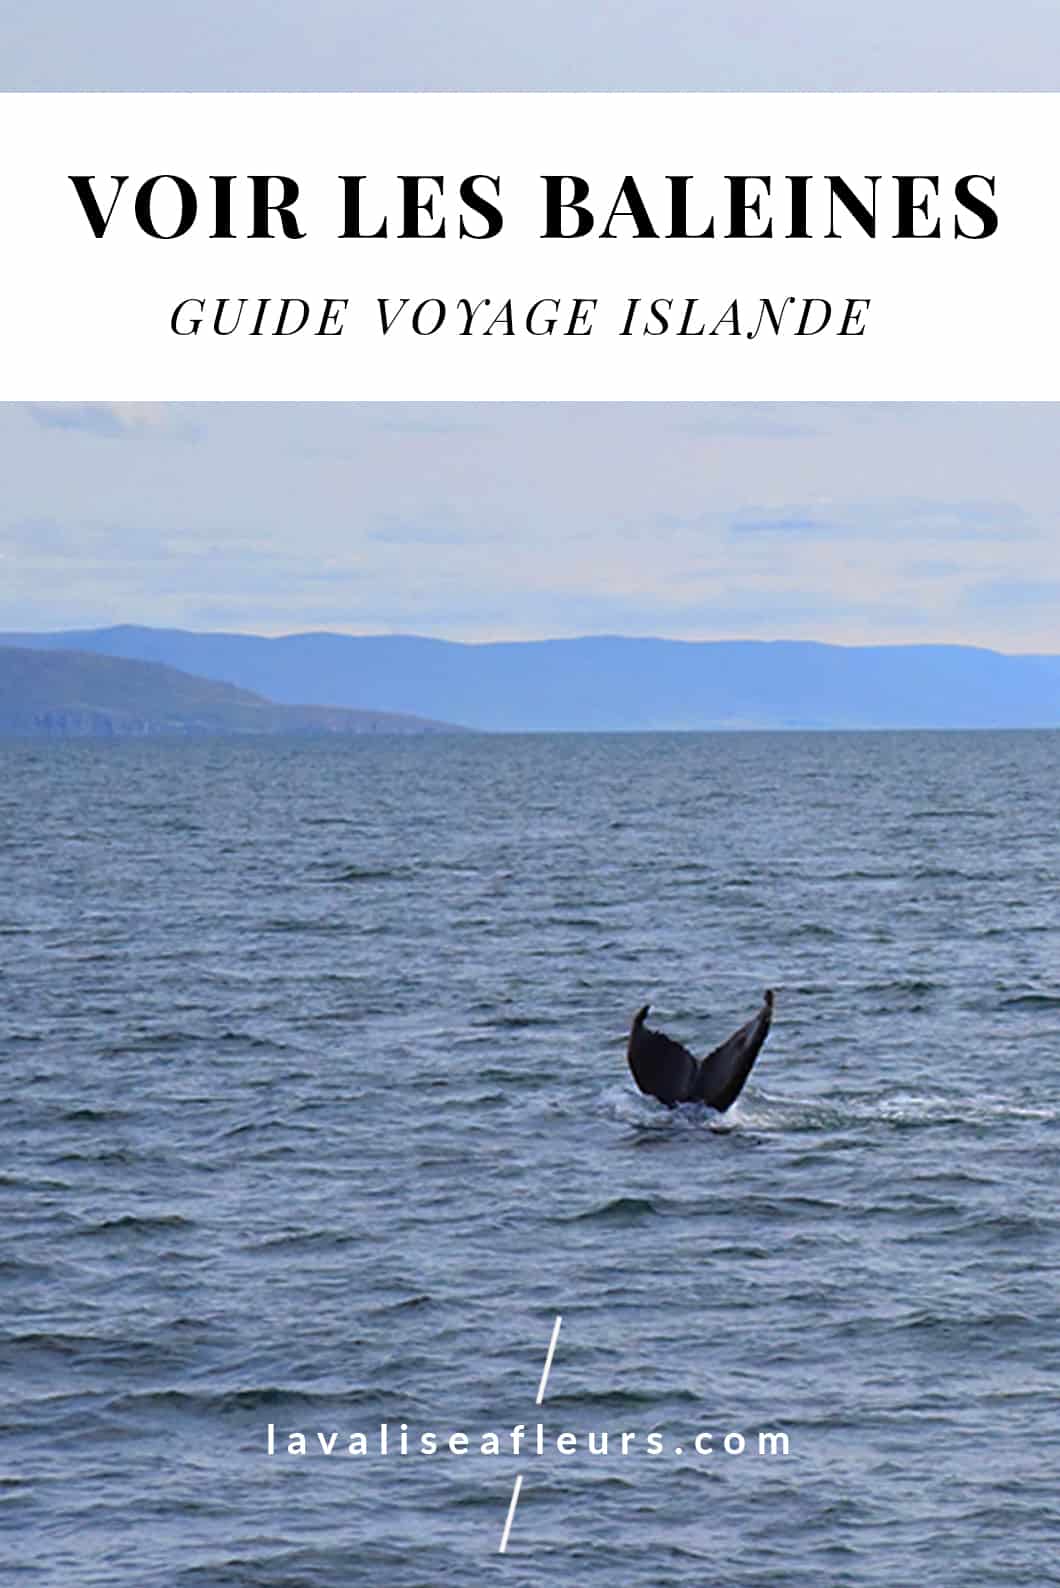 Où voir des baleines en Islande ? Notre guide voyage